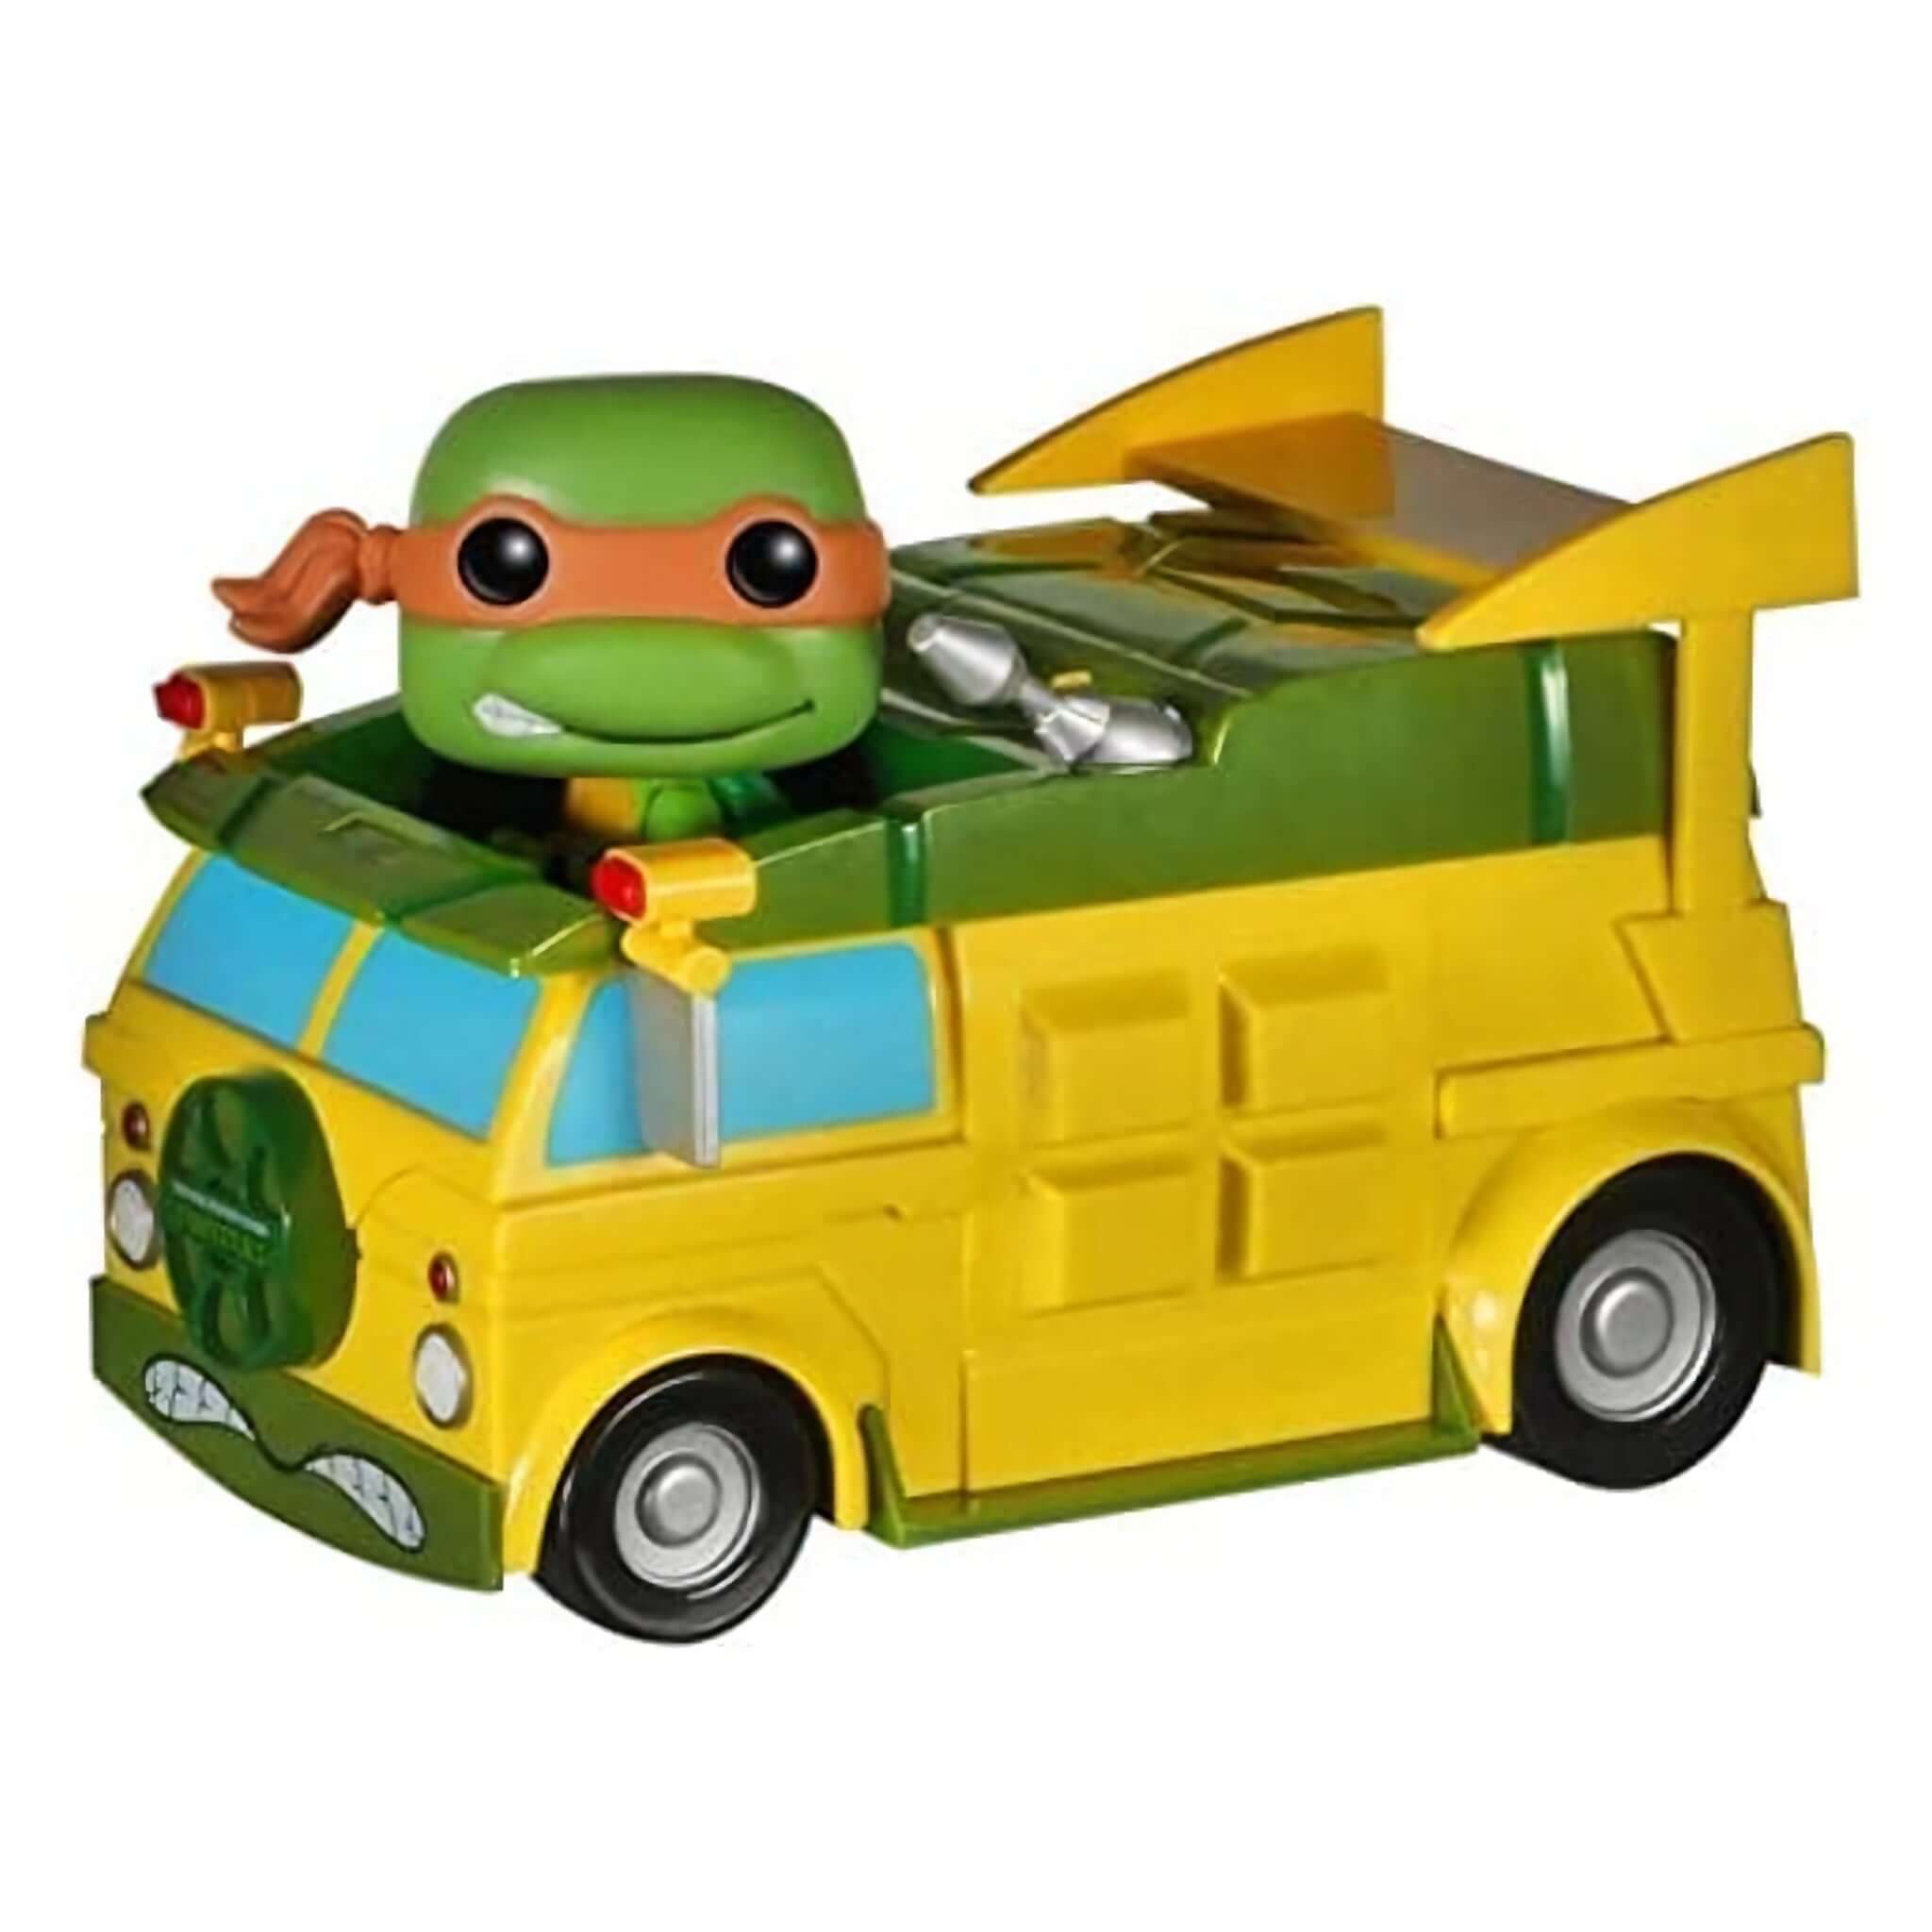 Turtle Van Funko Pop!-Jingle Truck Toys